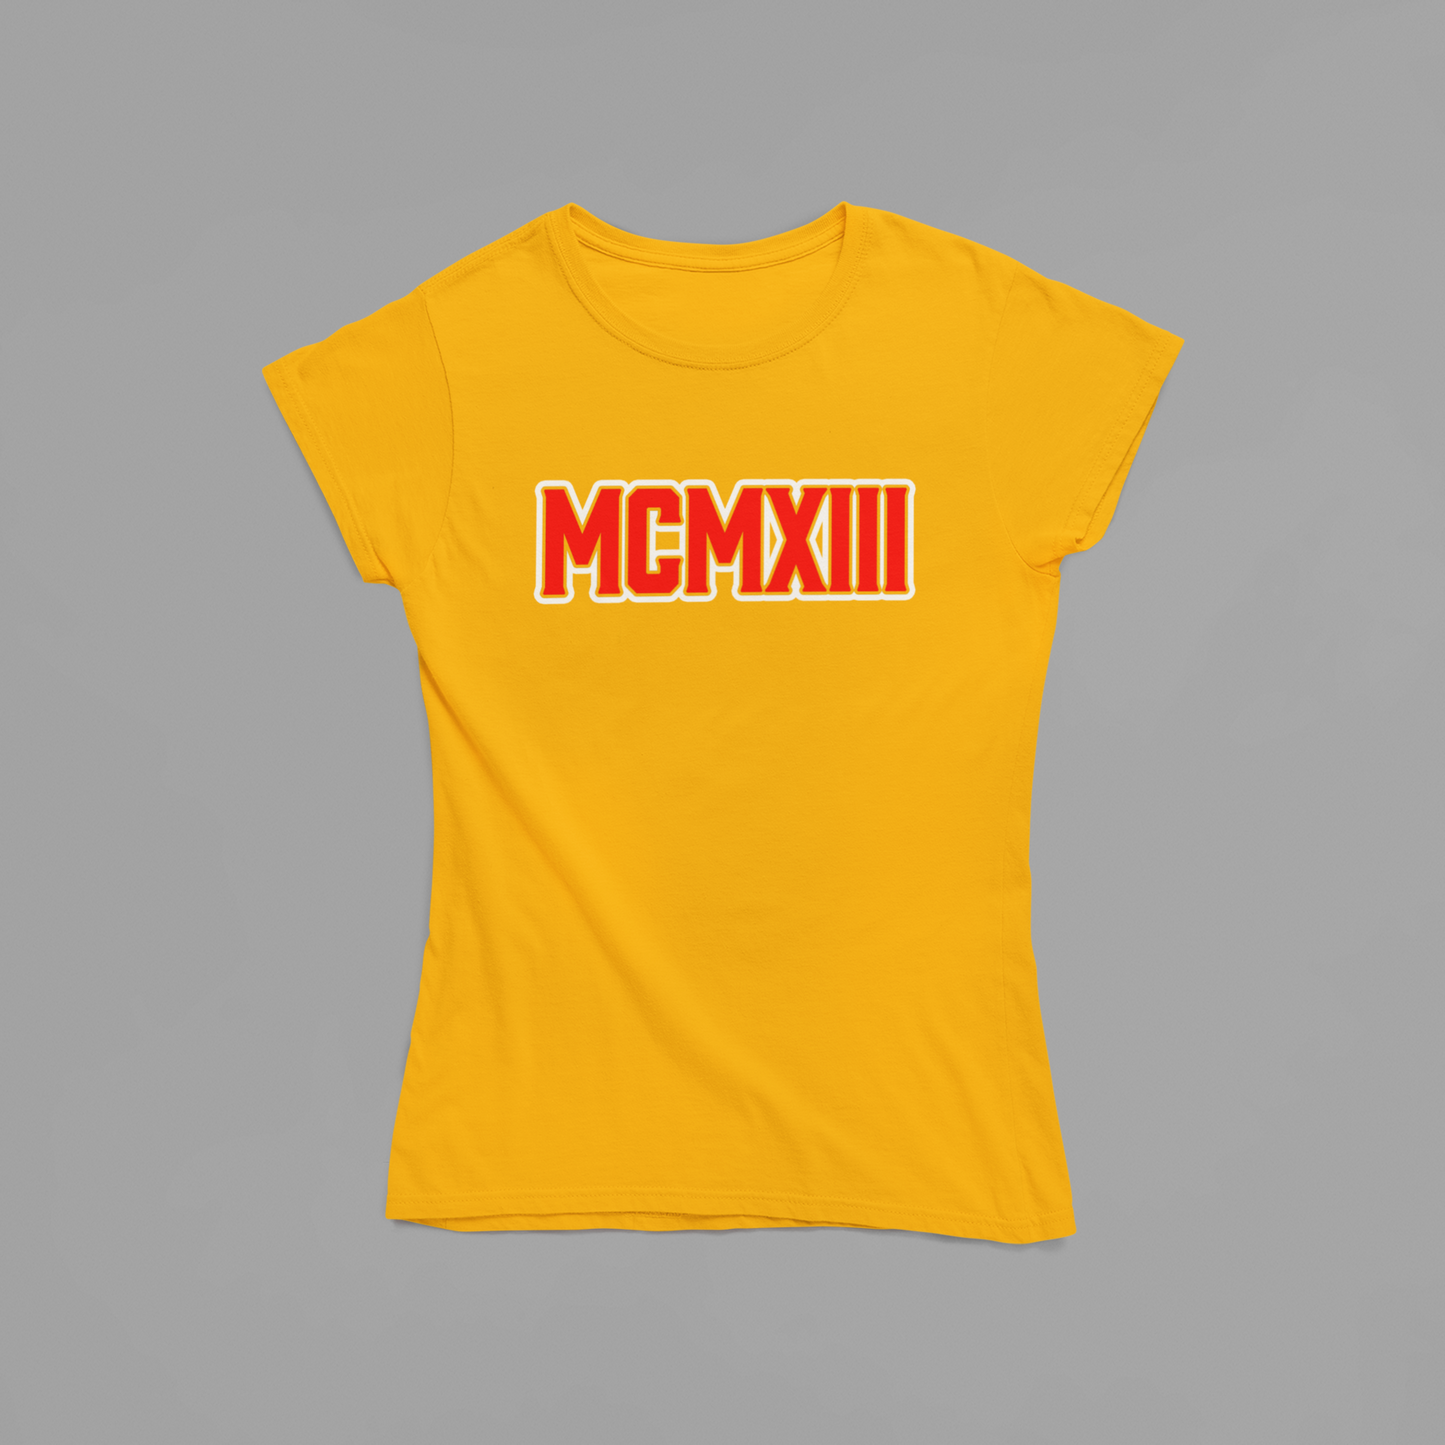 MCMXIII (1913 Roman Numerals)